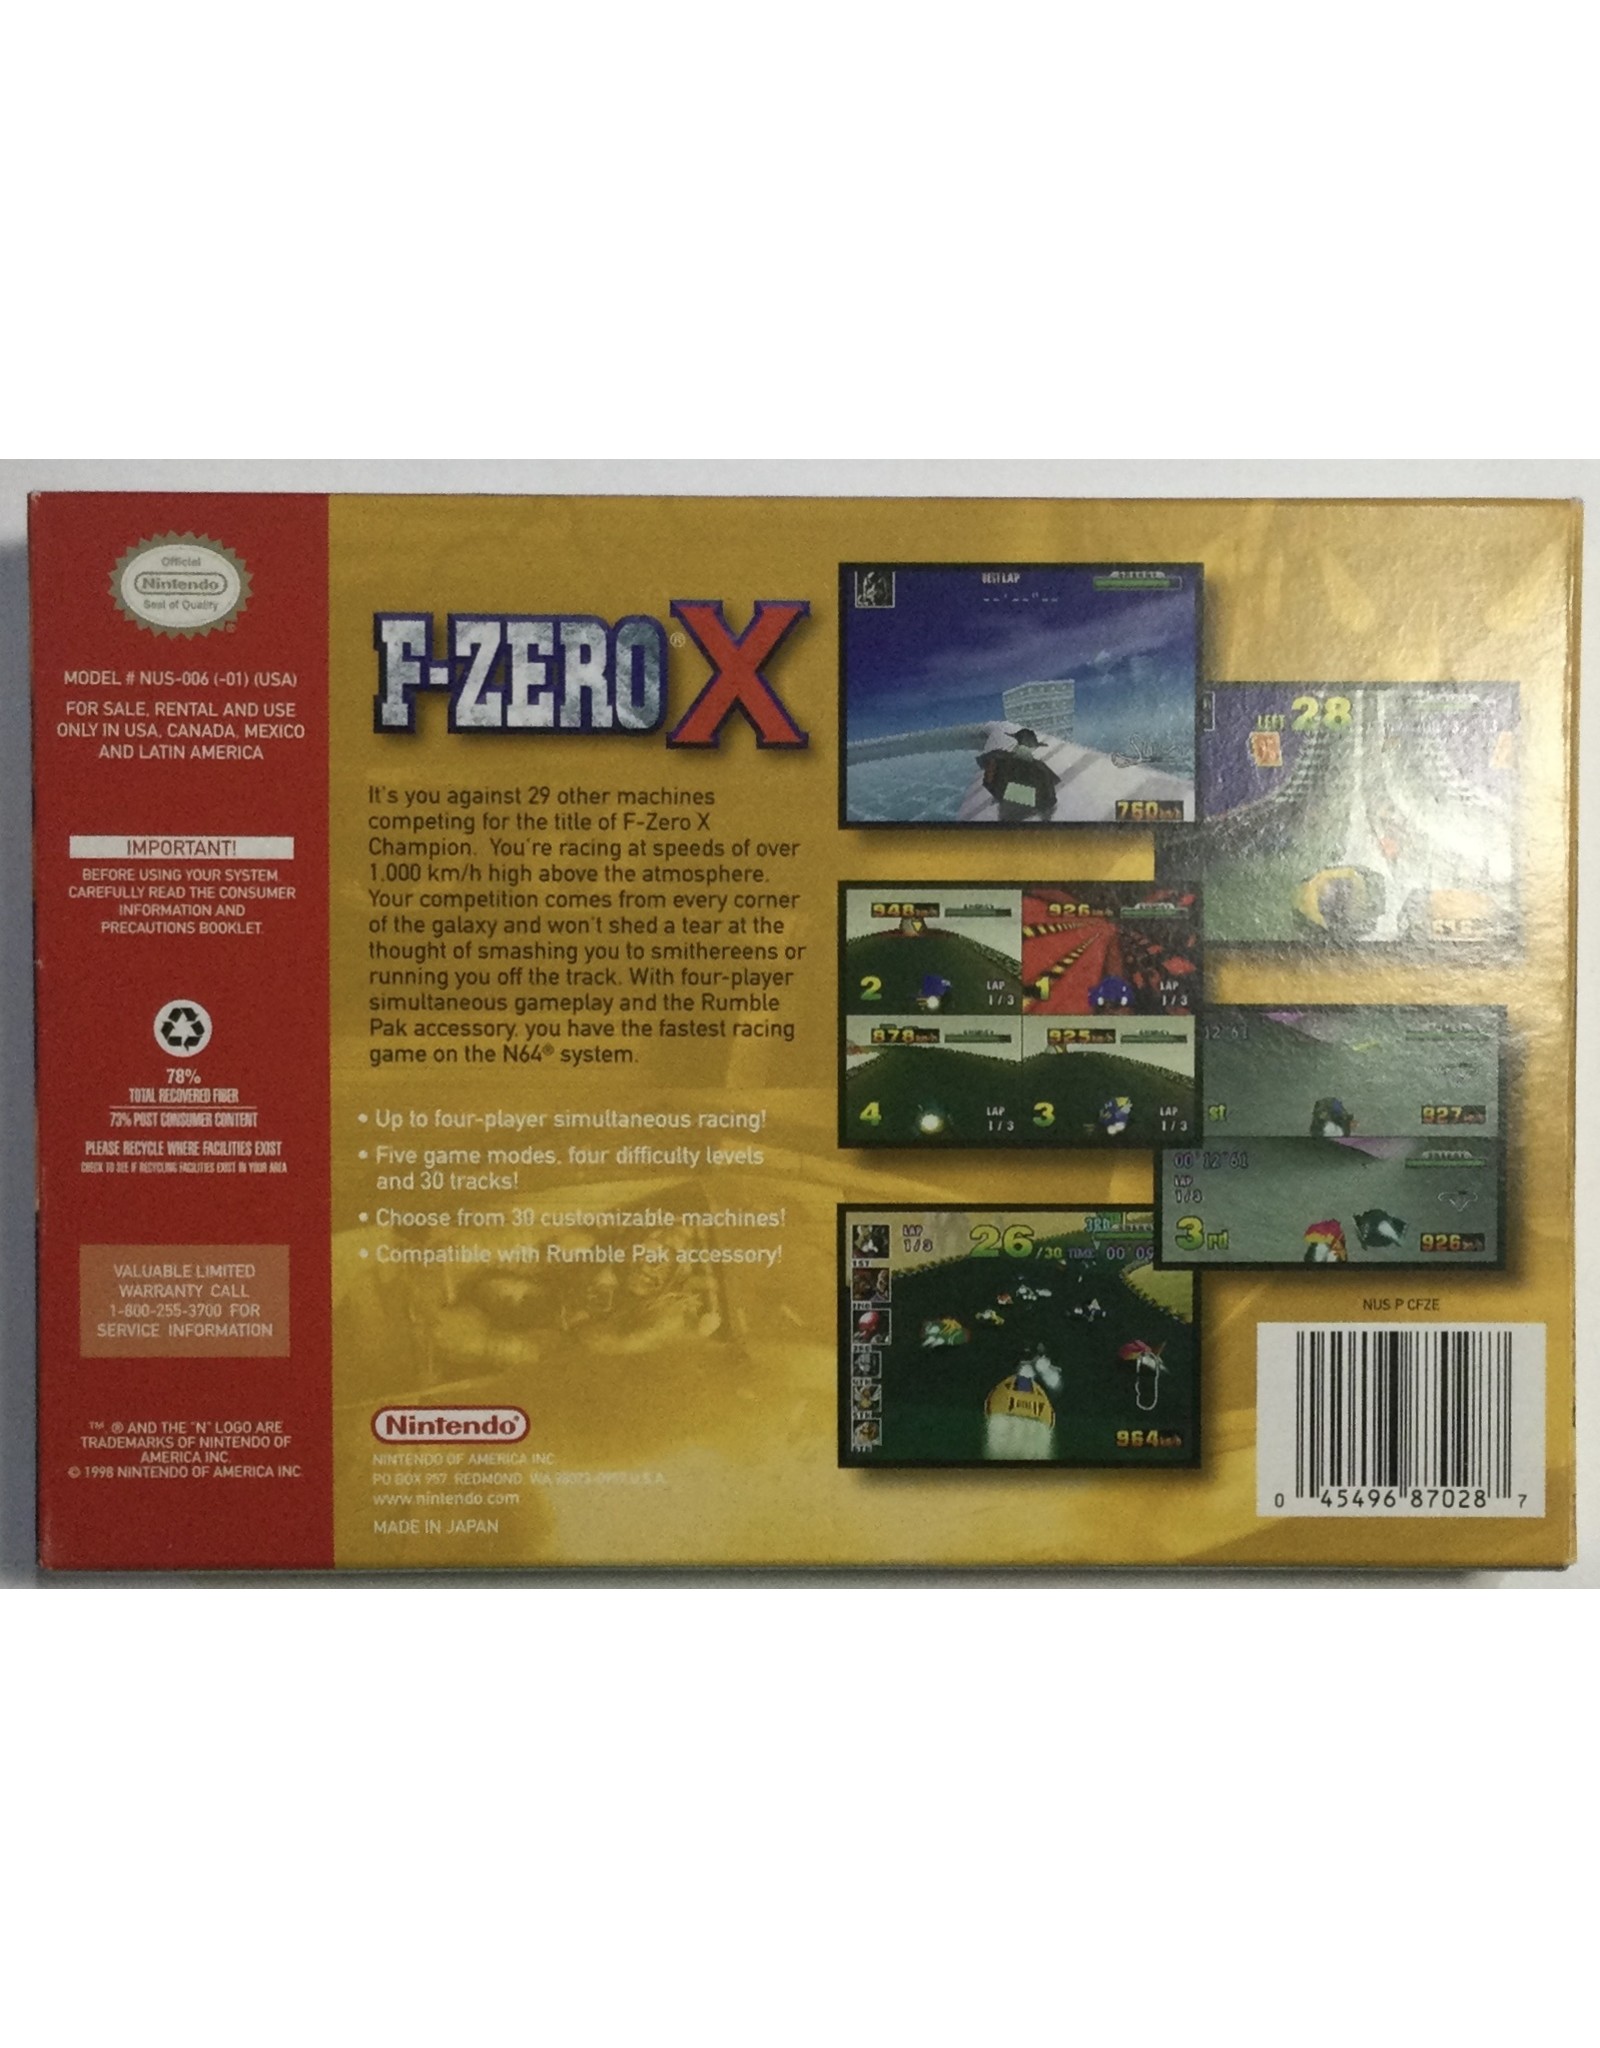 Nintendo F-Zero X for Nintendo 64 (N64) - CIB